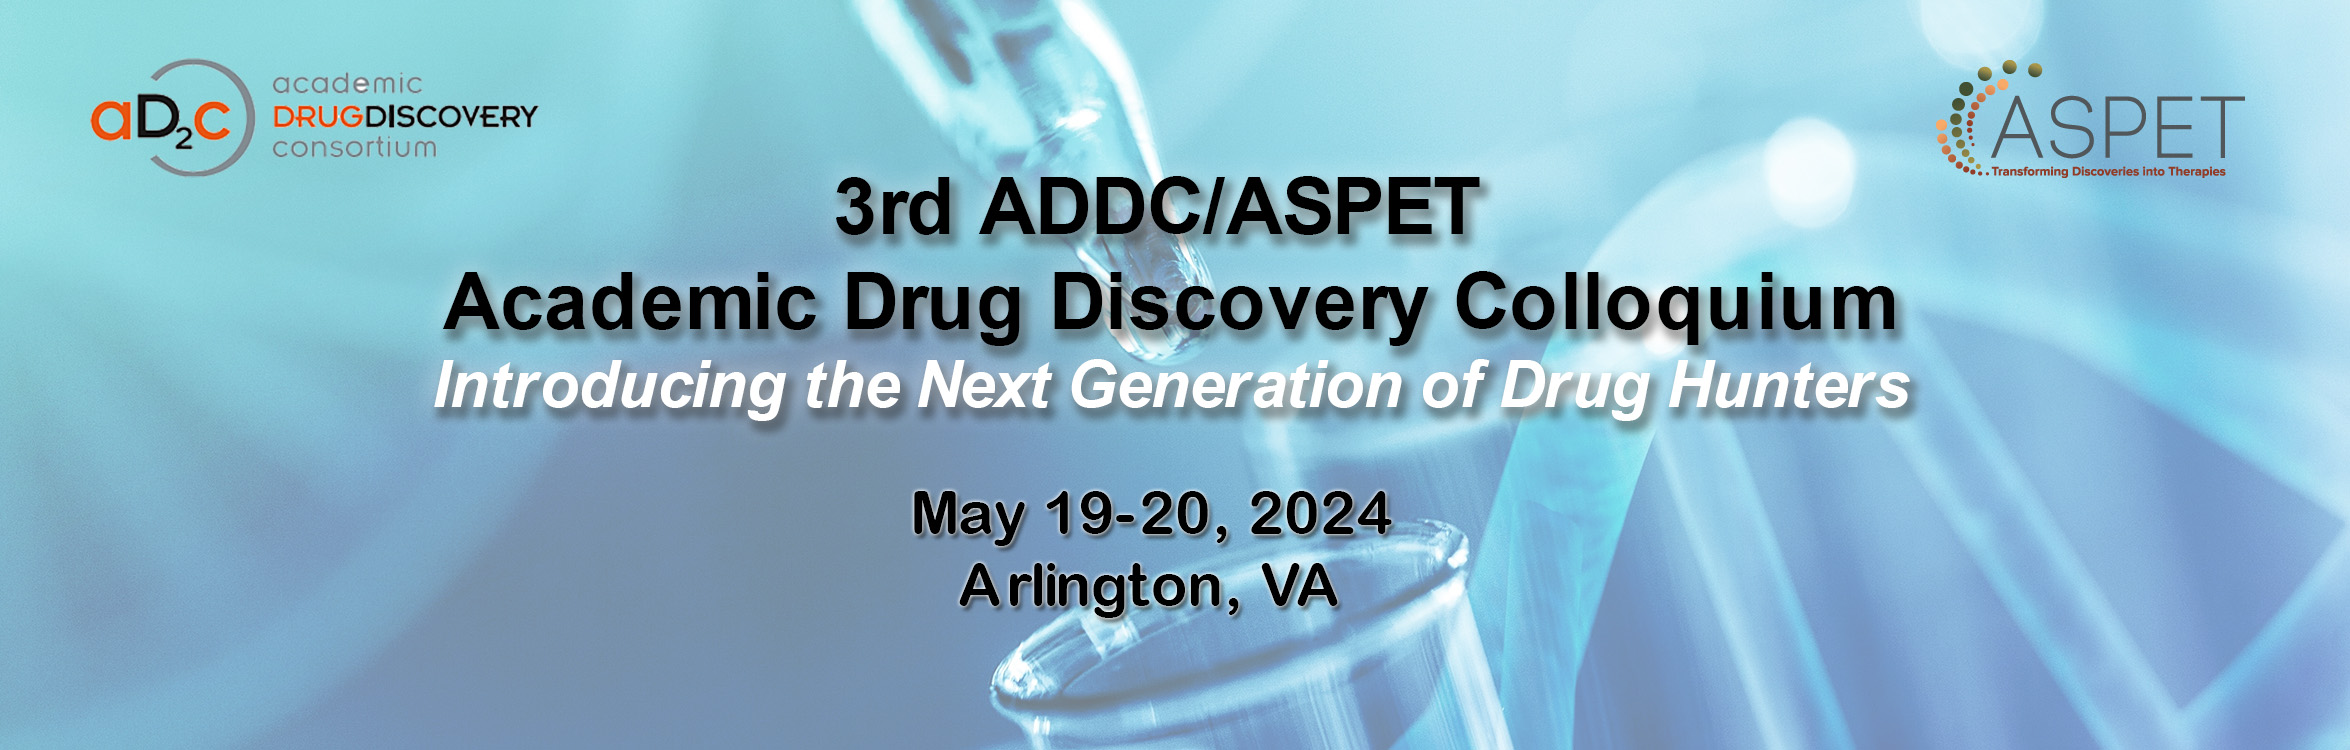 ADDC/ASPET Academic Drug Discovery Colloquium - Introducing the Next Generation of Drug Hunters - May 19-20, 2024 Arlington VA